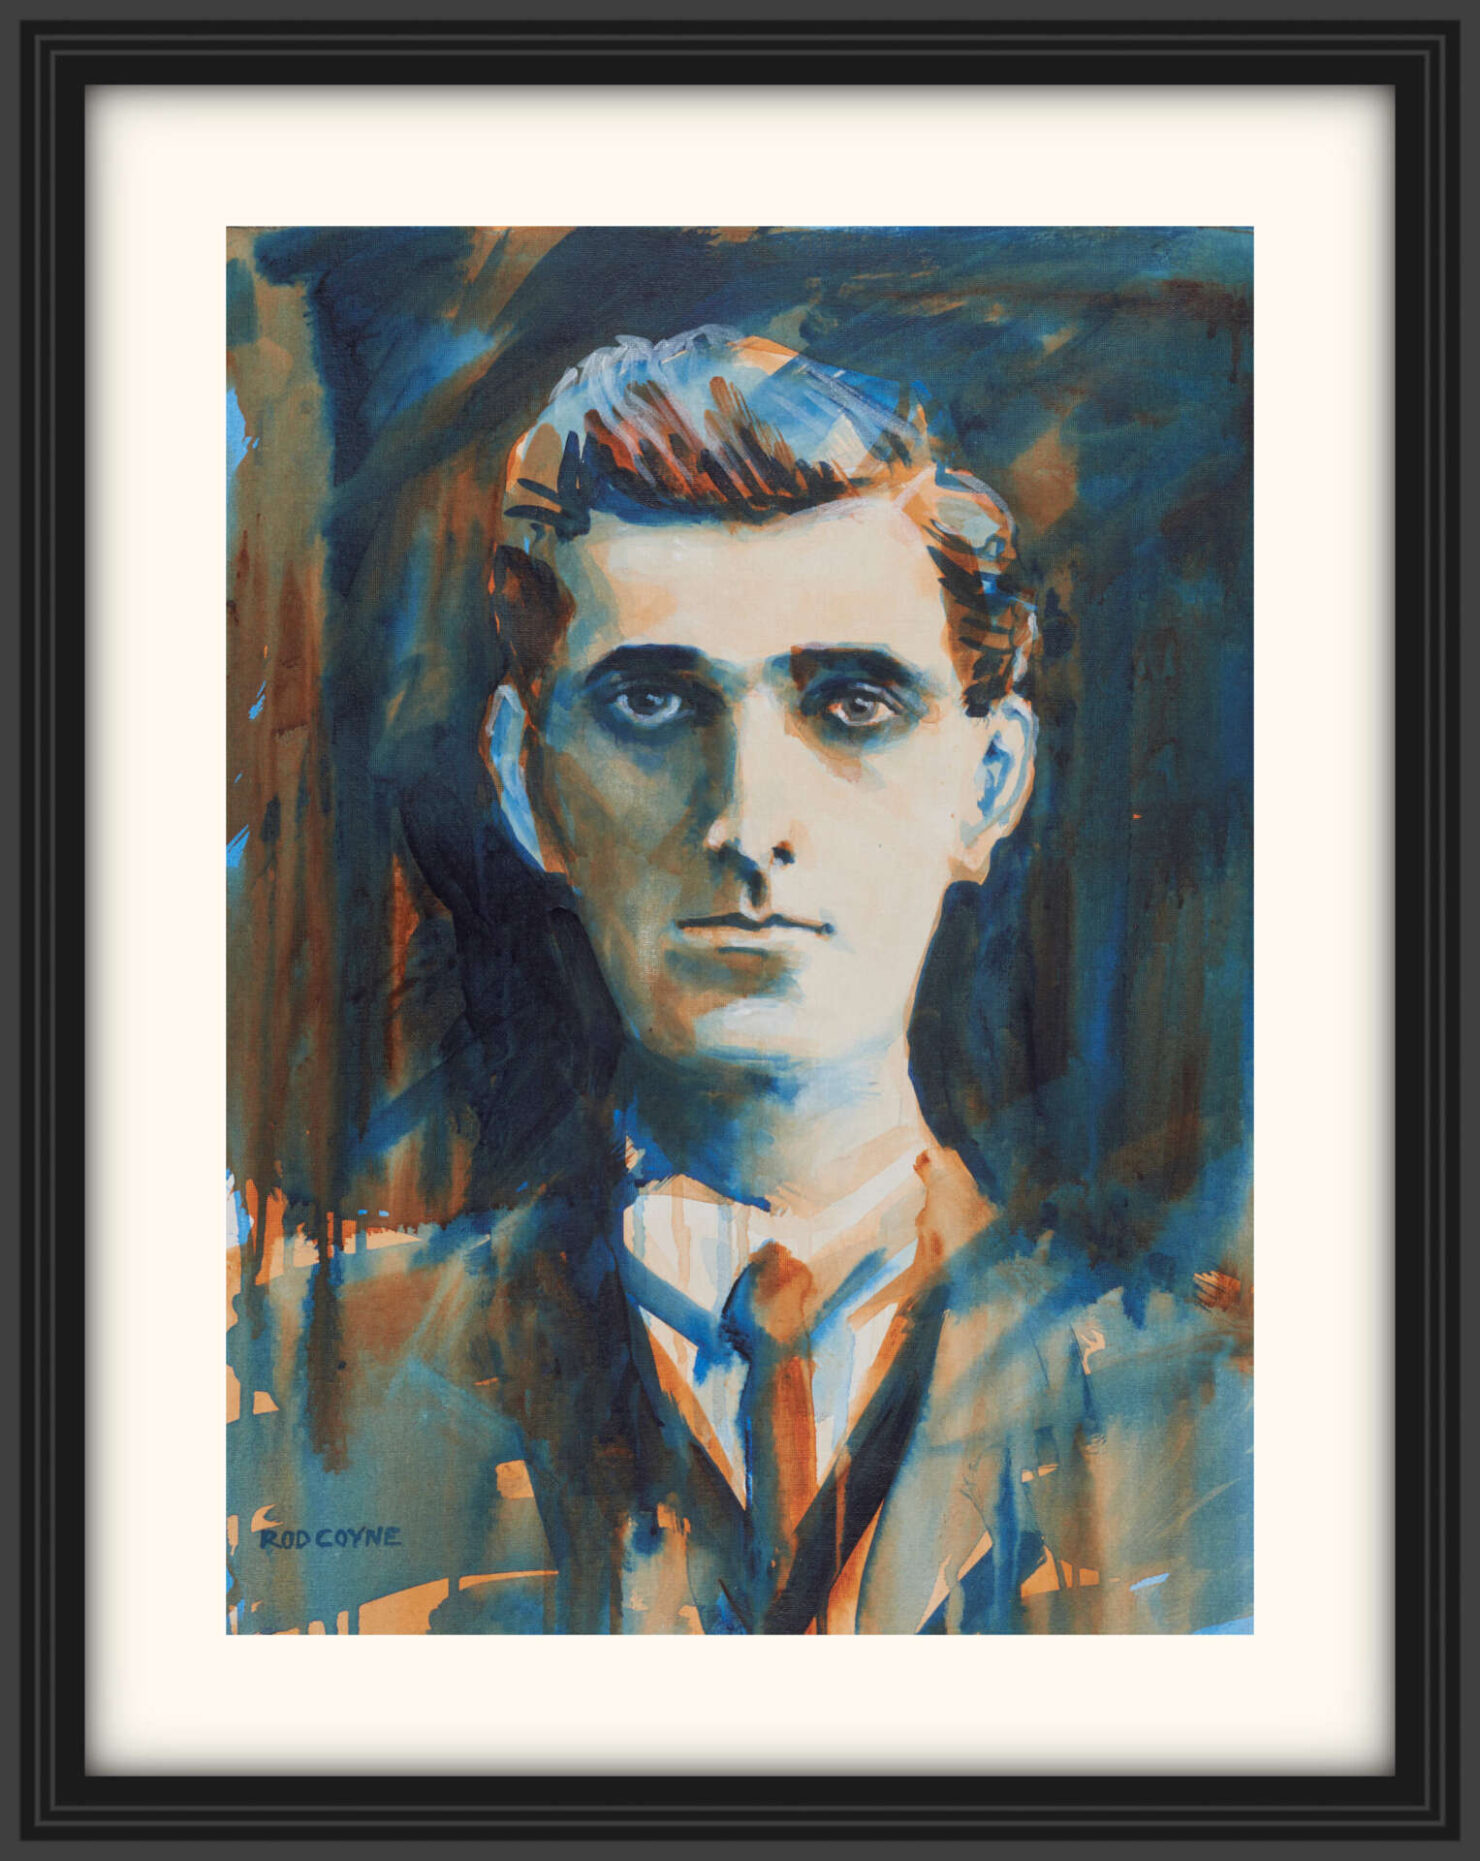 artist rod coyne's portrait "Seán Mac Diarmada 1916" is shown here, on a white mount in a black frame.